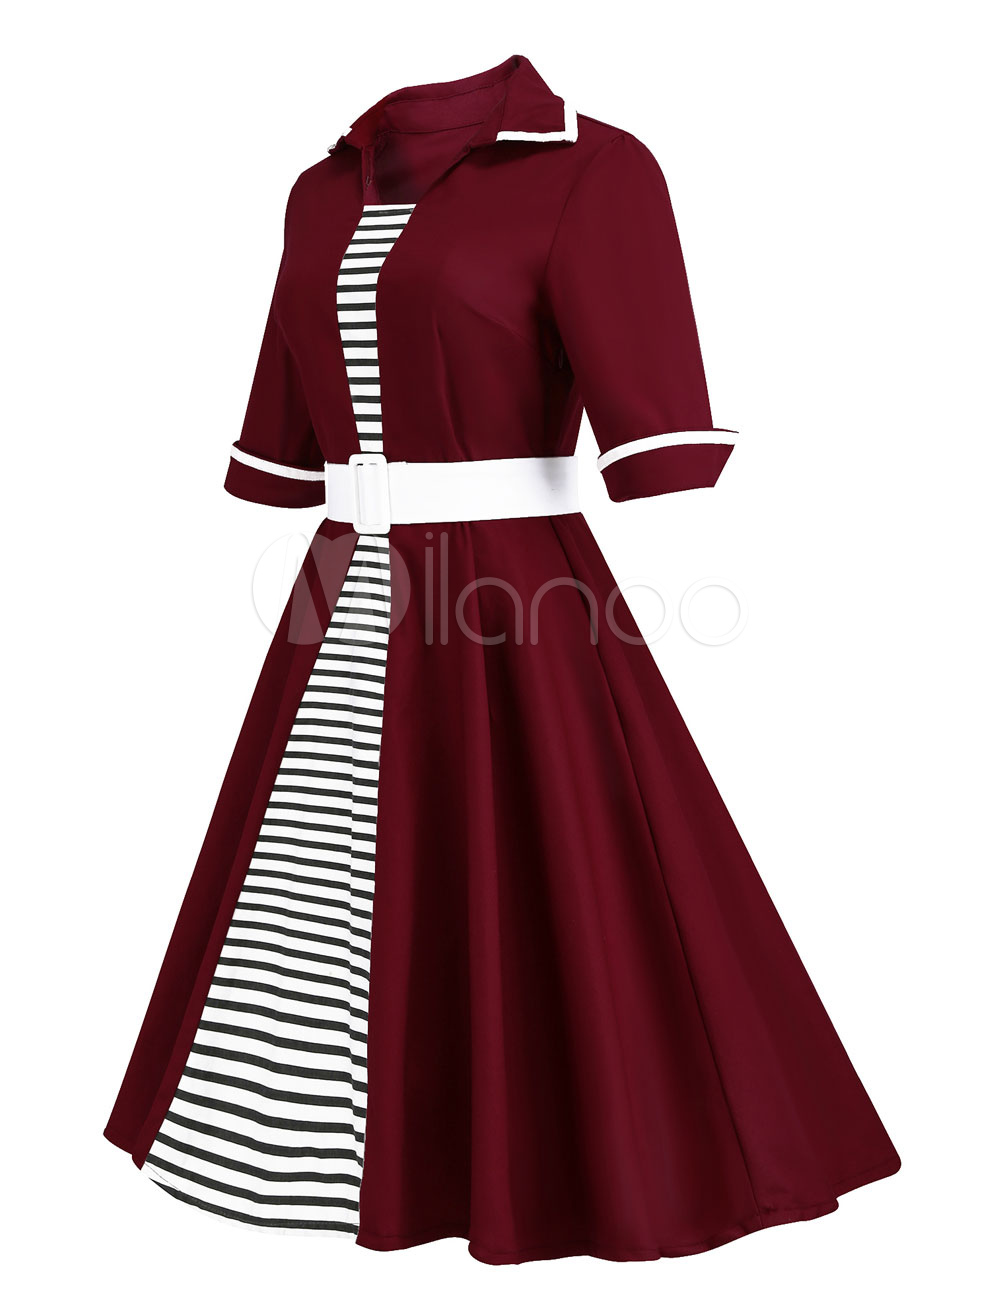 burgundy 1950s dress